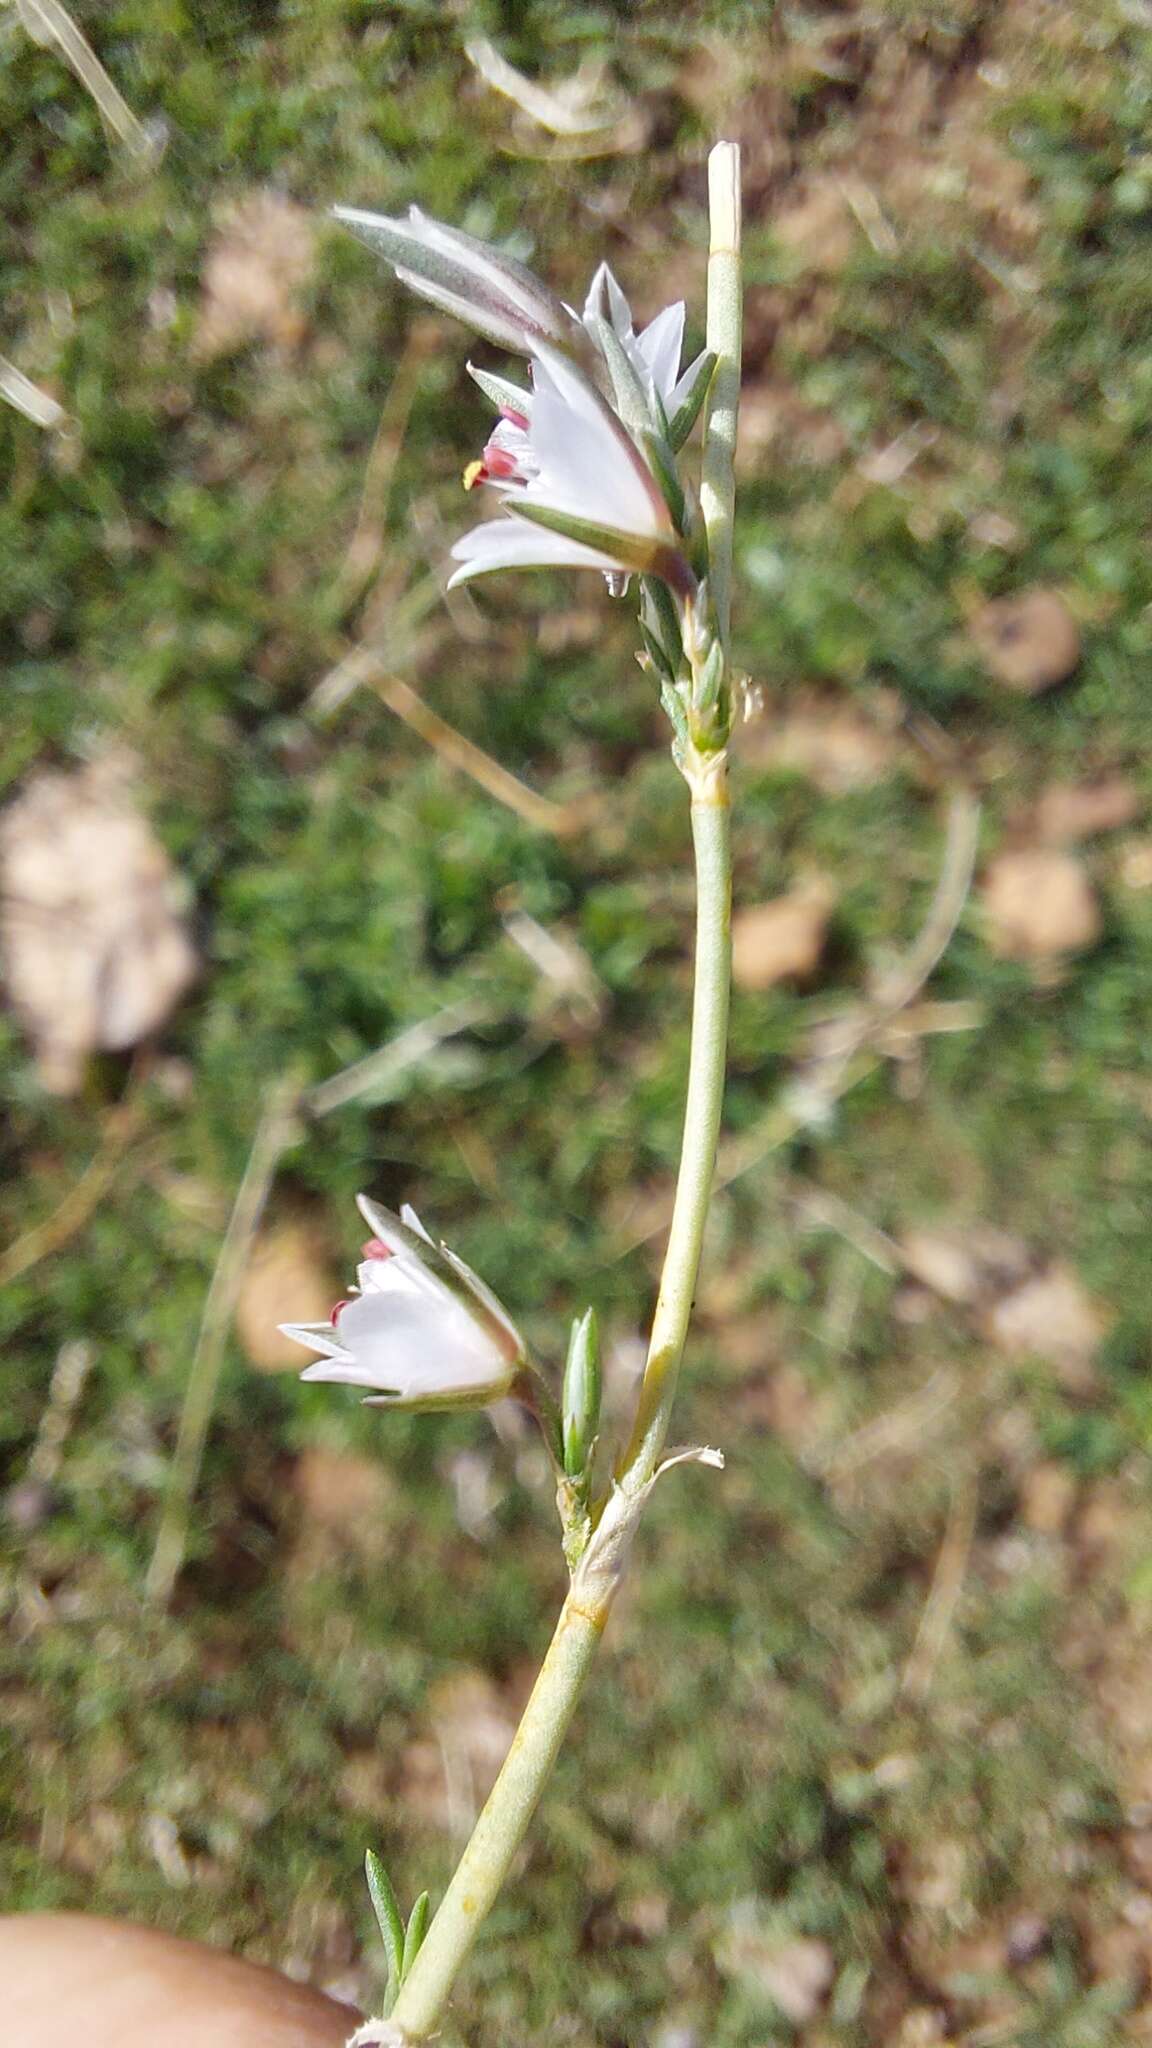 Image de Bufonia duvaljouvei subsp. duvaljouvei